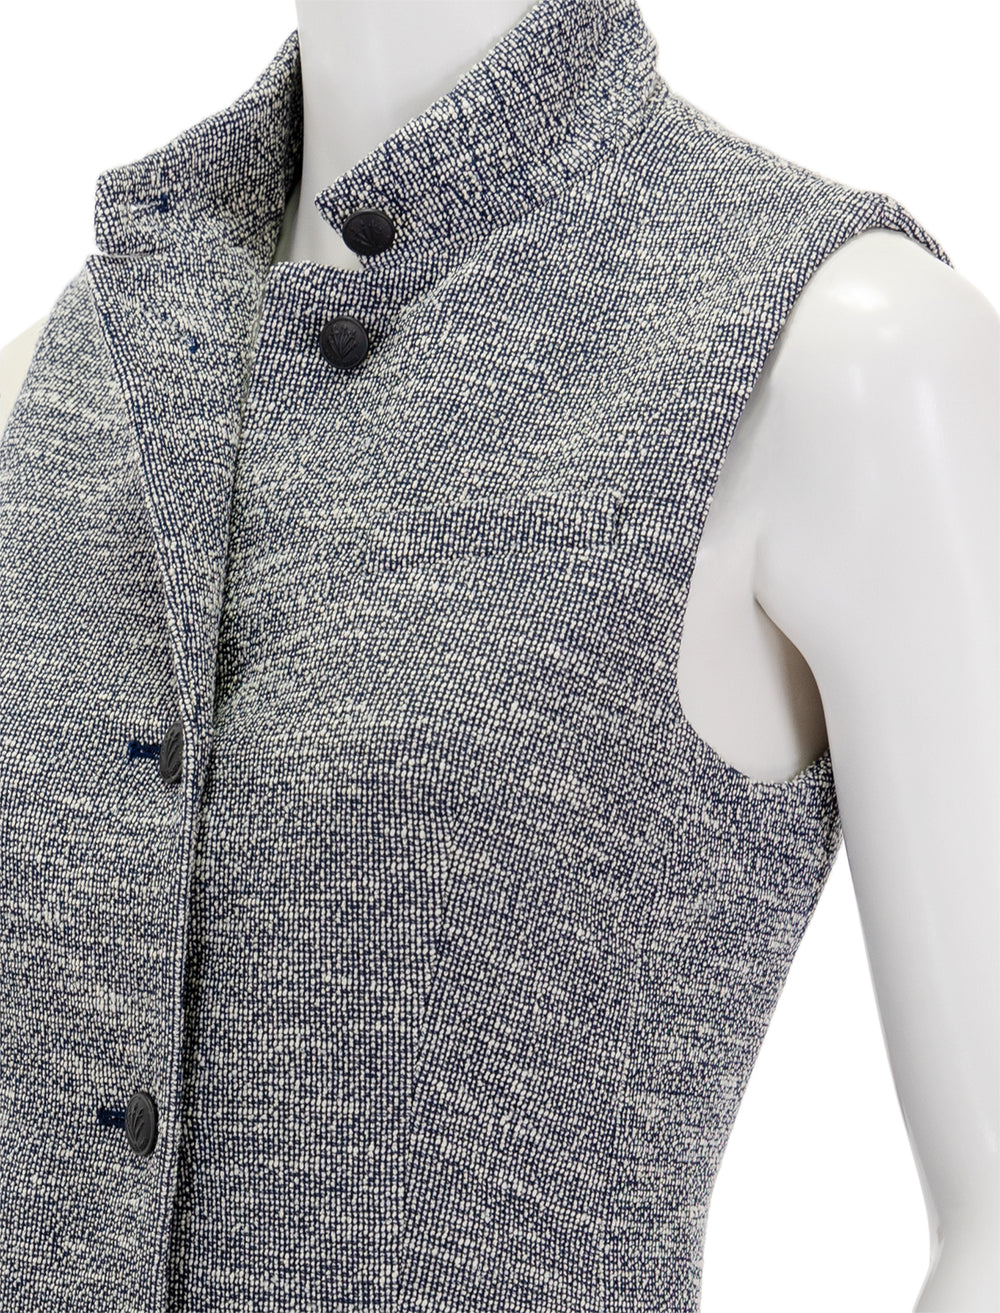 Close-up view of Rag & Bone's slade italian tweed vest dress.